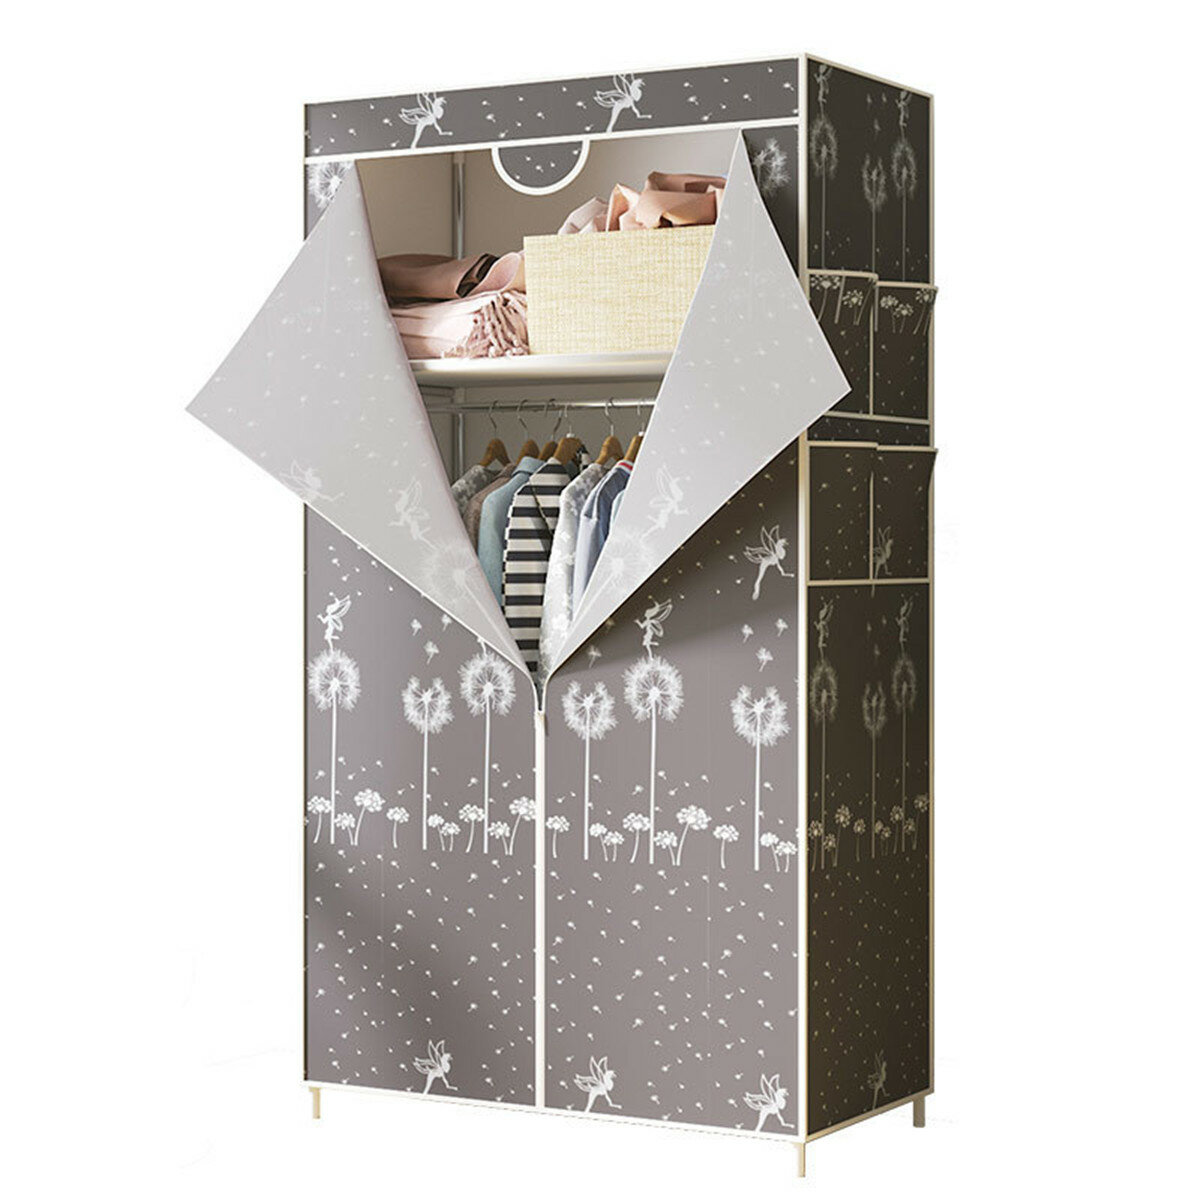 70x45x160cm Foldable Non-woven Fabric Wardrobe Home Clothes Closet Storage Organizer